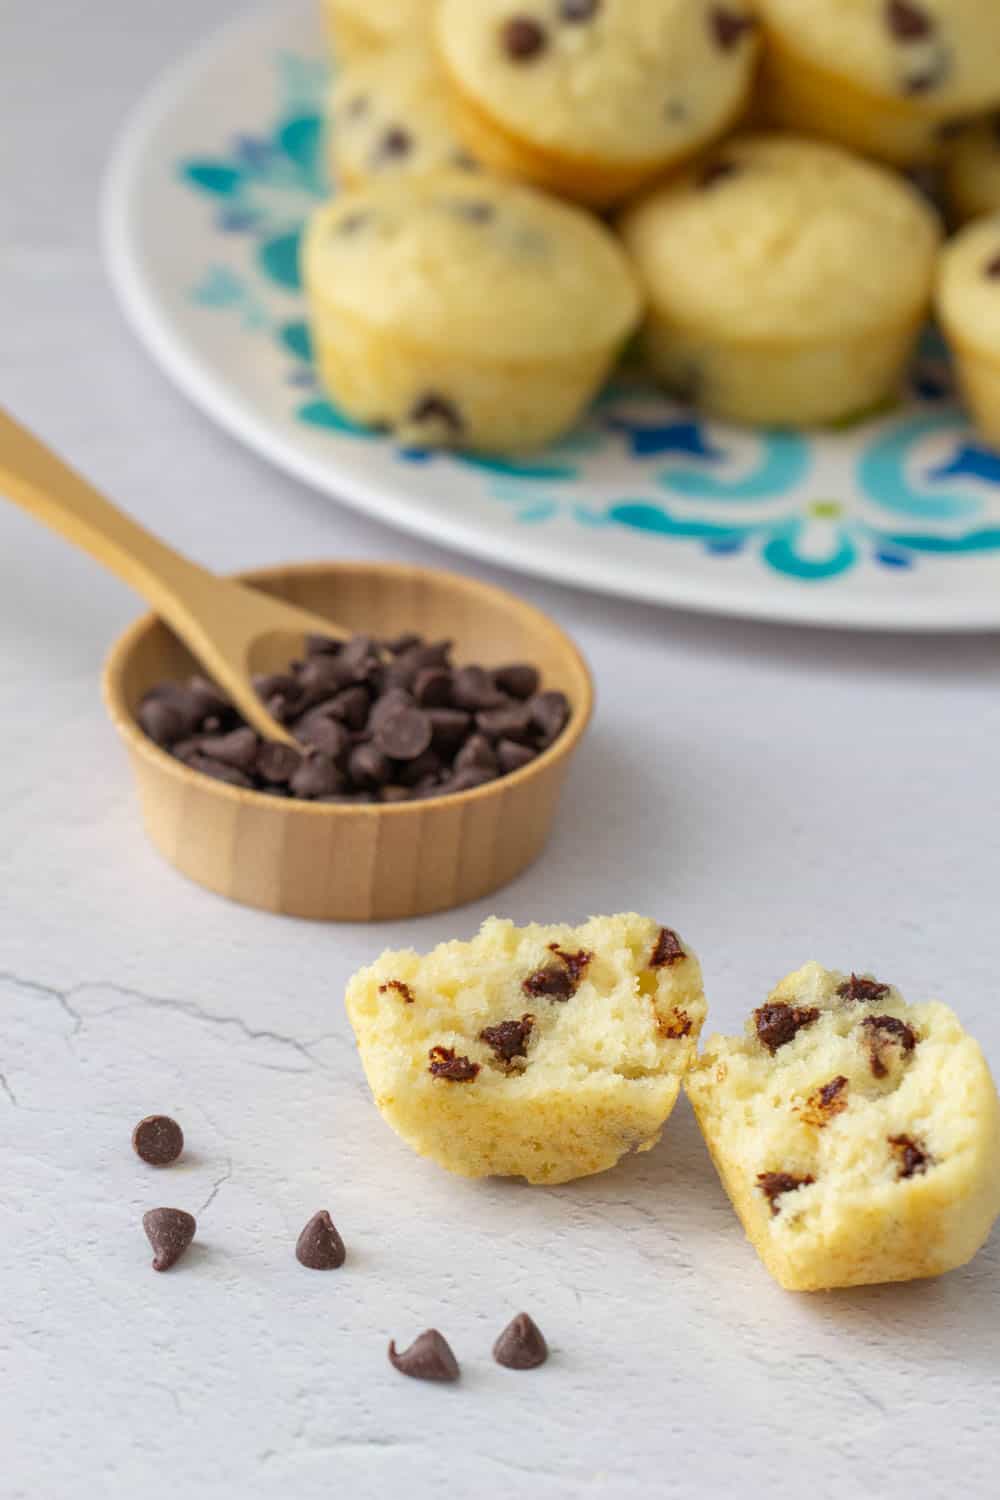 https://happysnackcidents.com/wp-content/uploads/2021/05/Chocolate-Chip-Mini-Muffins-Image.jpg